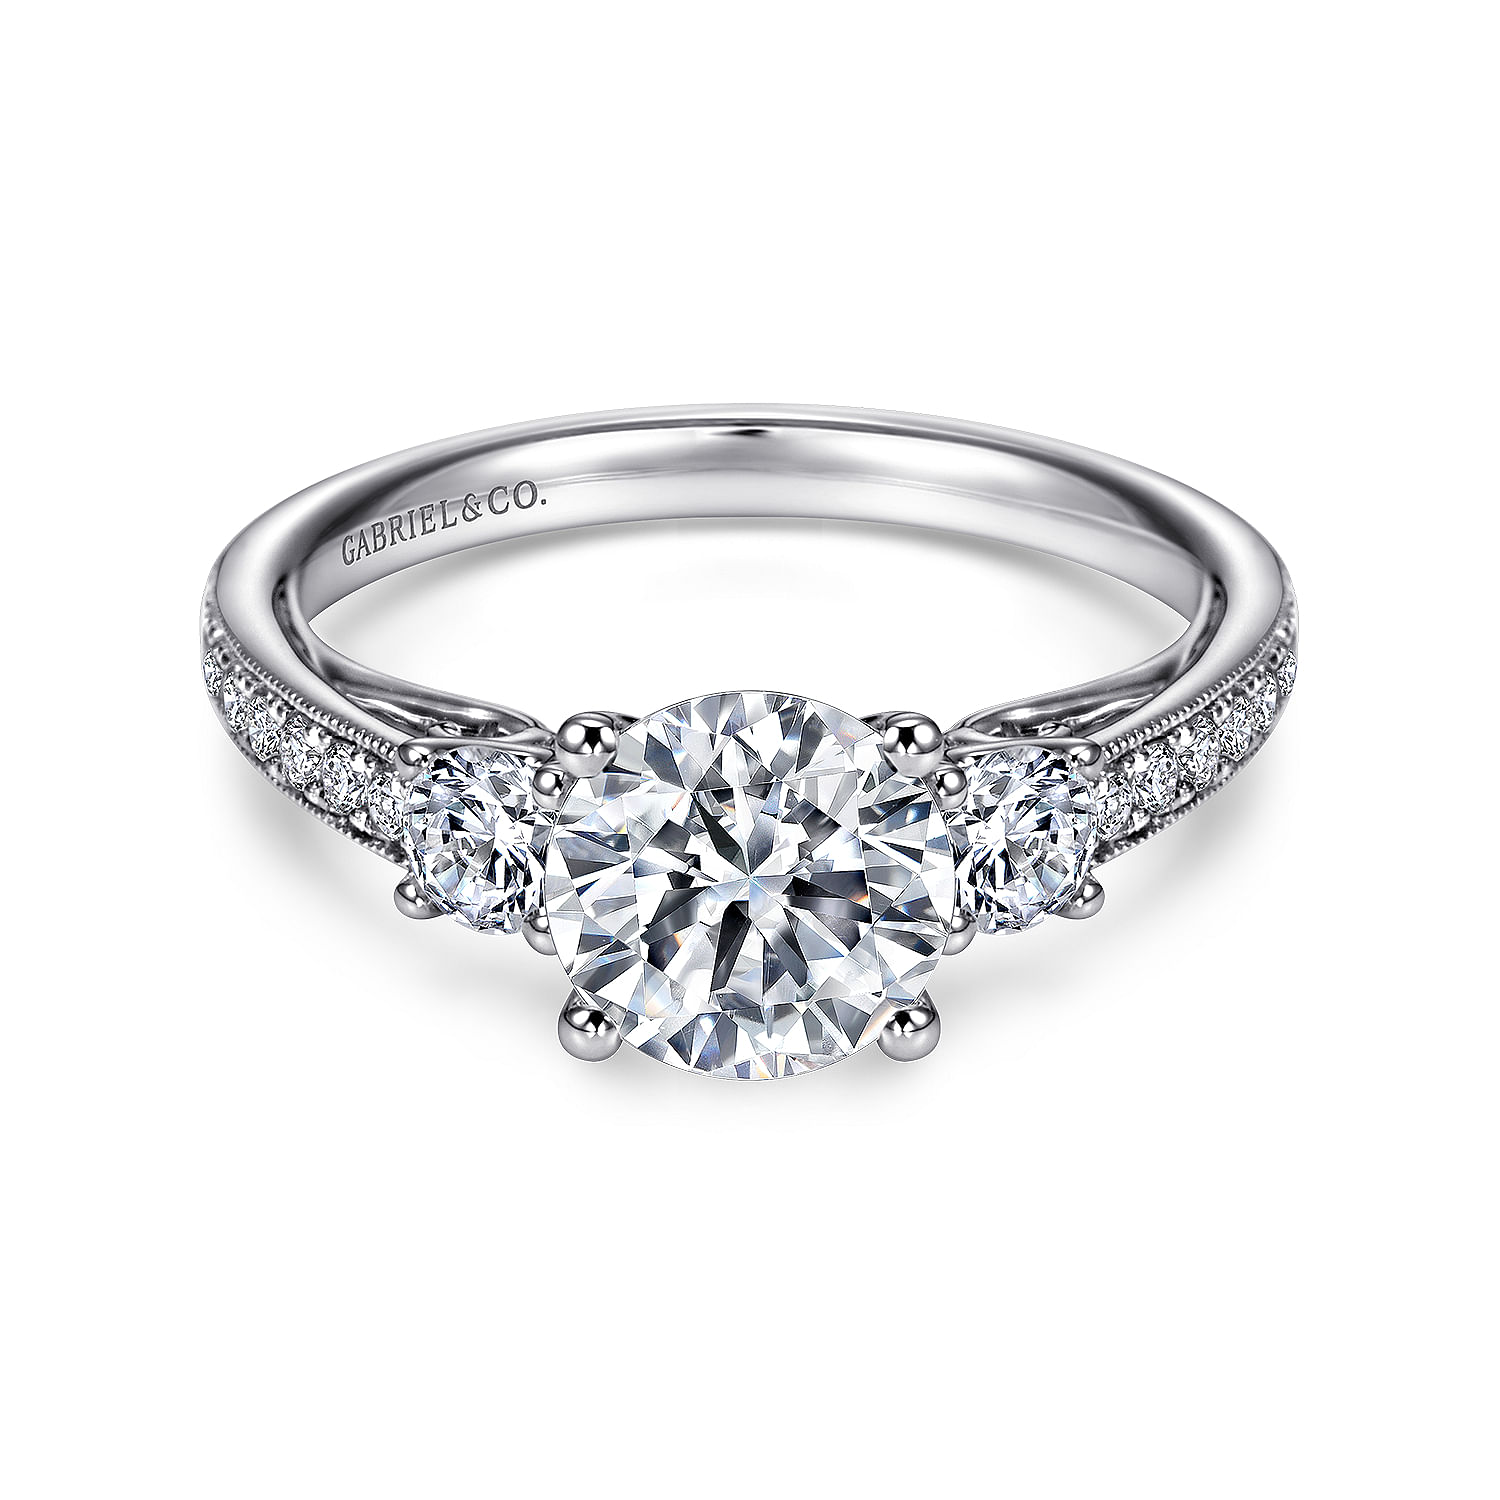 Rory - Vintage Inspired 14K White Gold Round Three Stone Diamond Engagement Ring